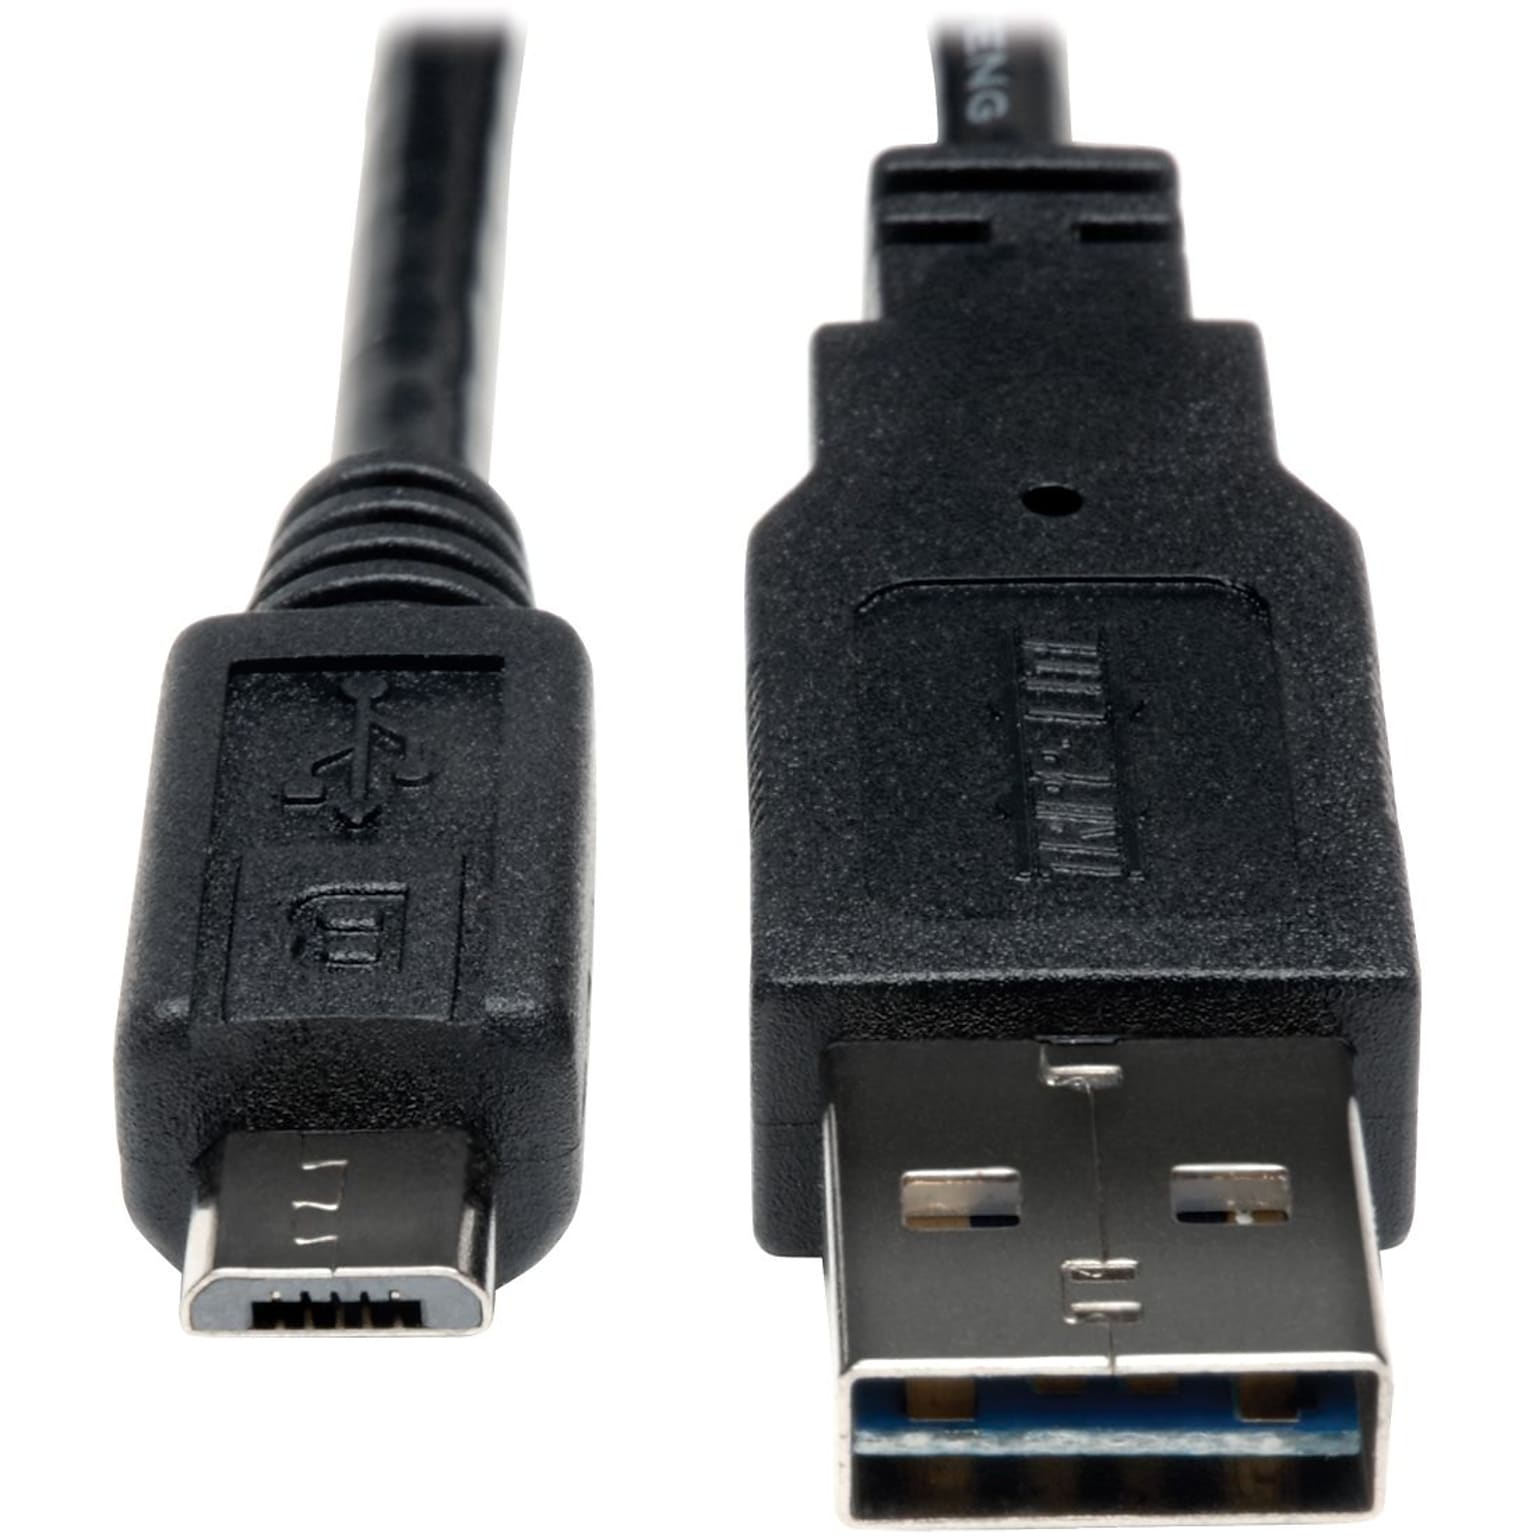 Tripp Lite 6 Universal Reversible USB 2.0 A Male to Micro USB B Male USB Cable; Black